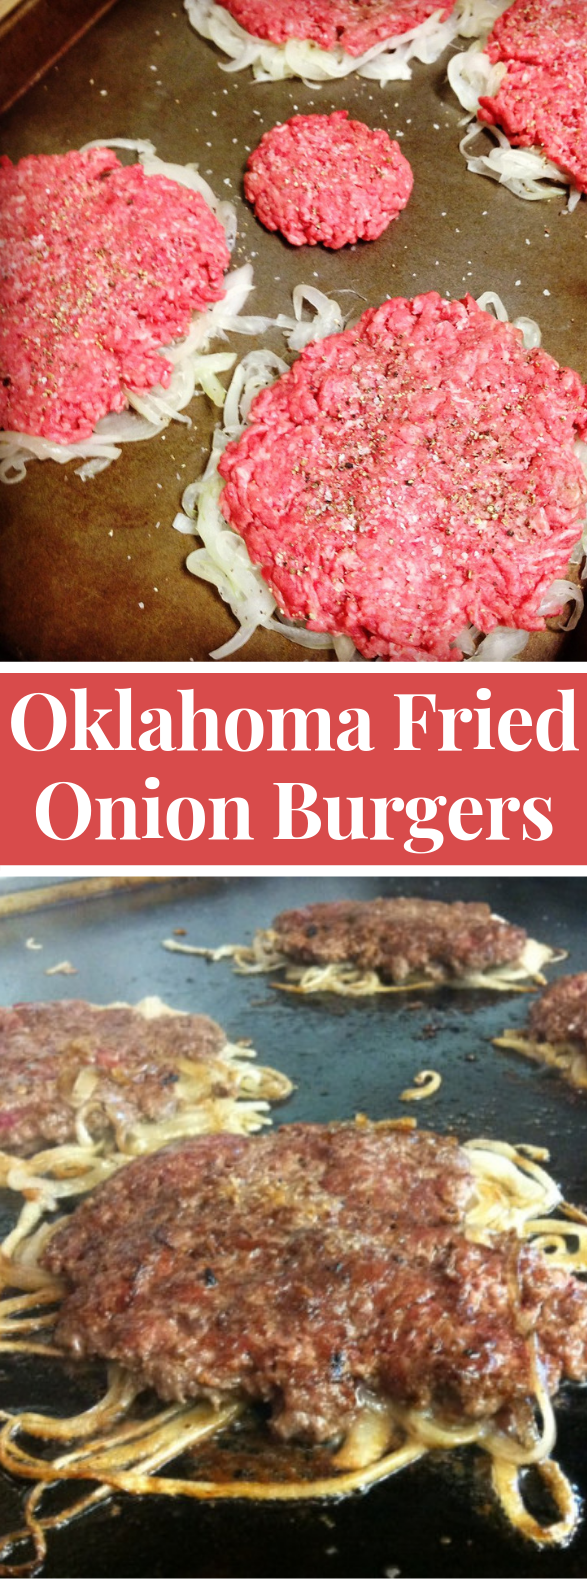 Oklahoma Fried Onion Burgers #dinner #easyrecipe